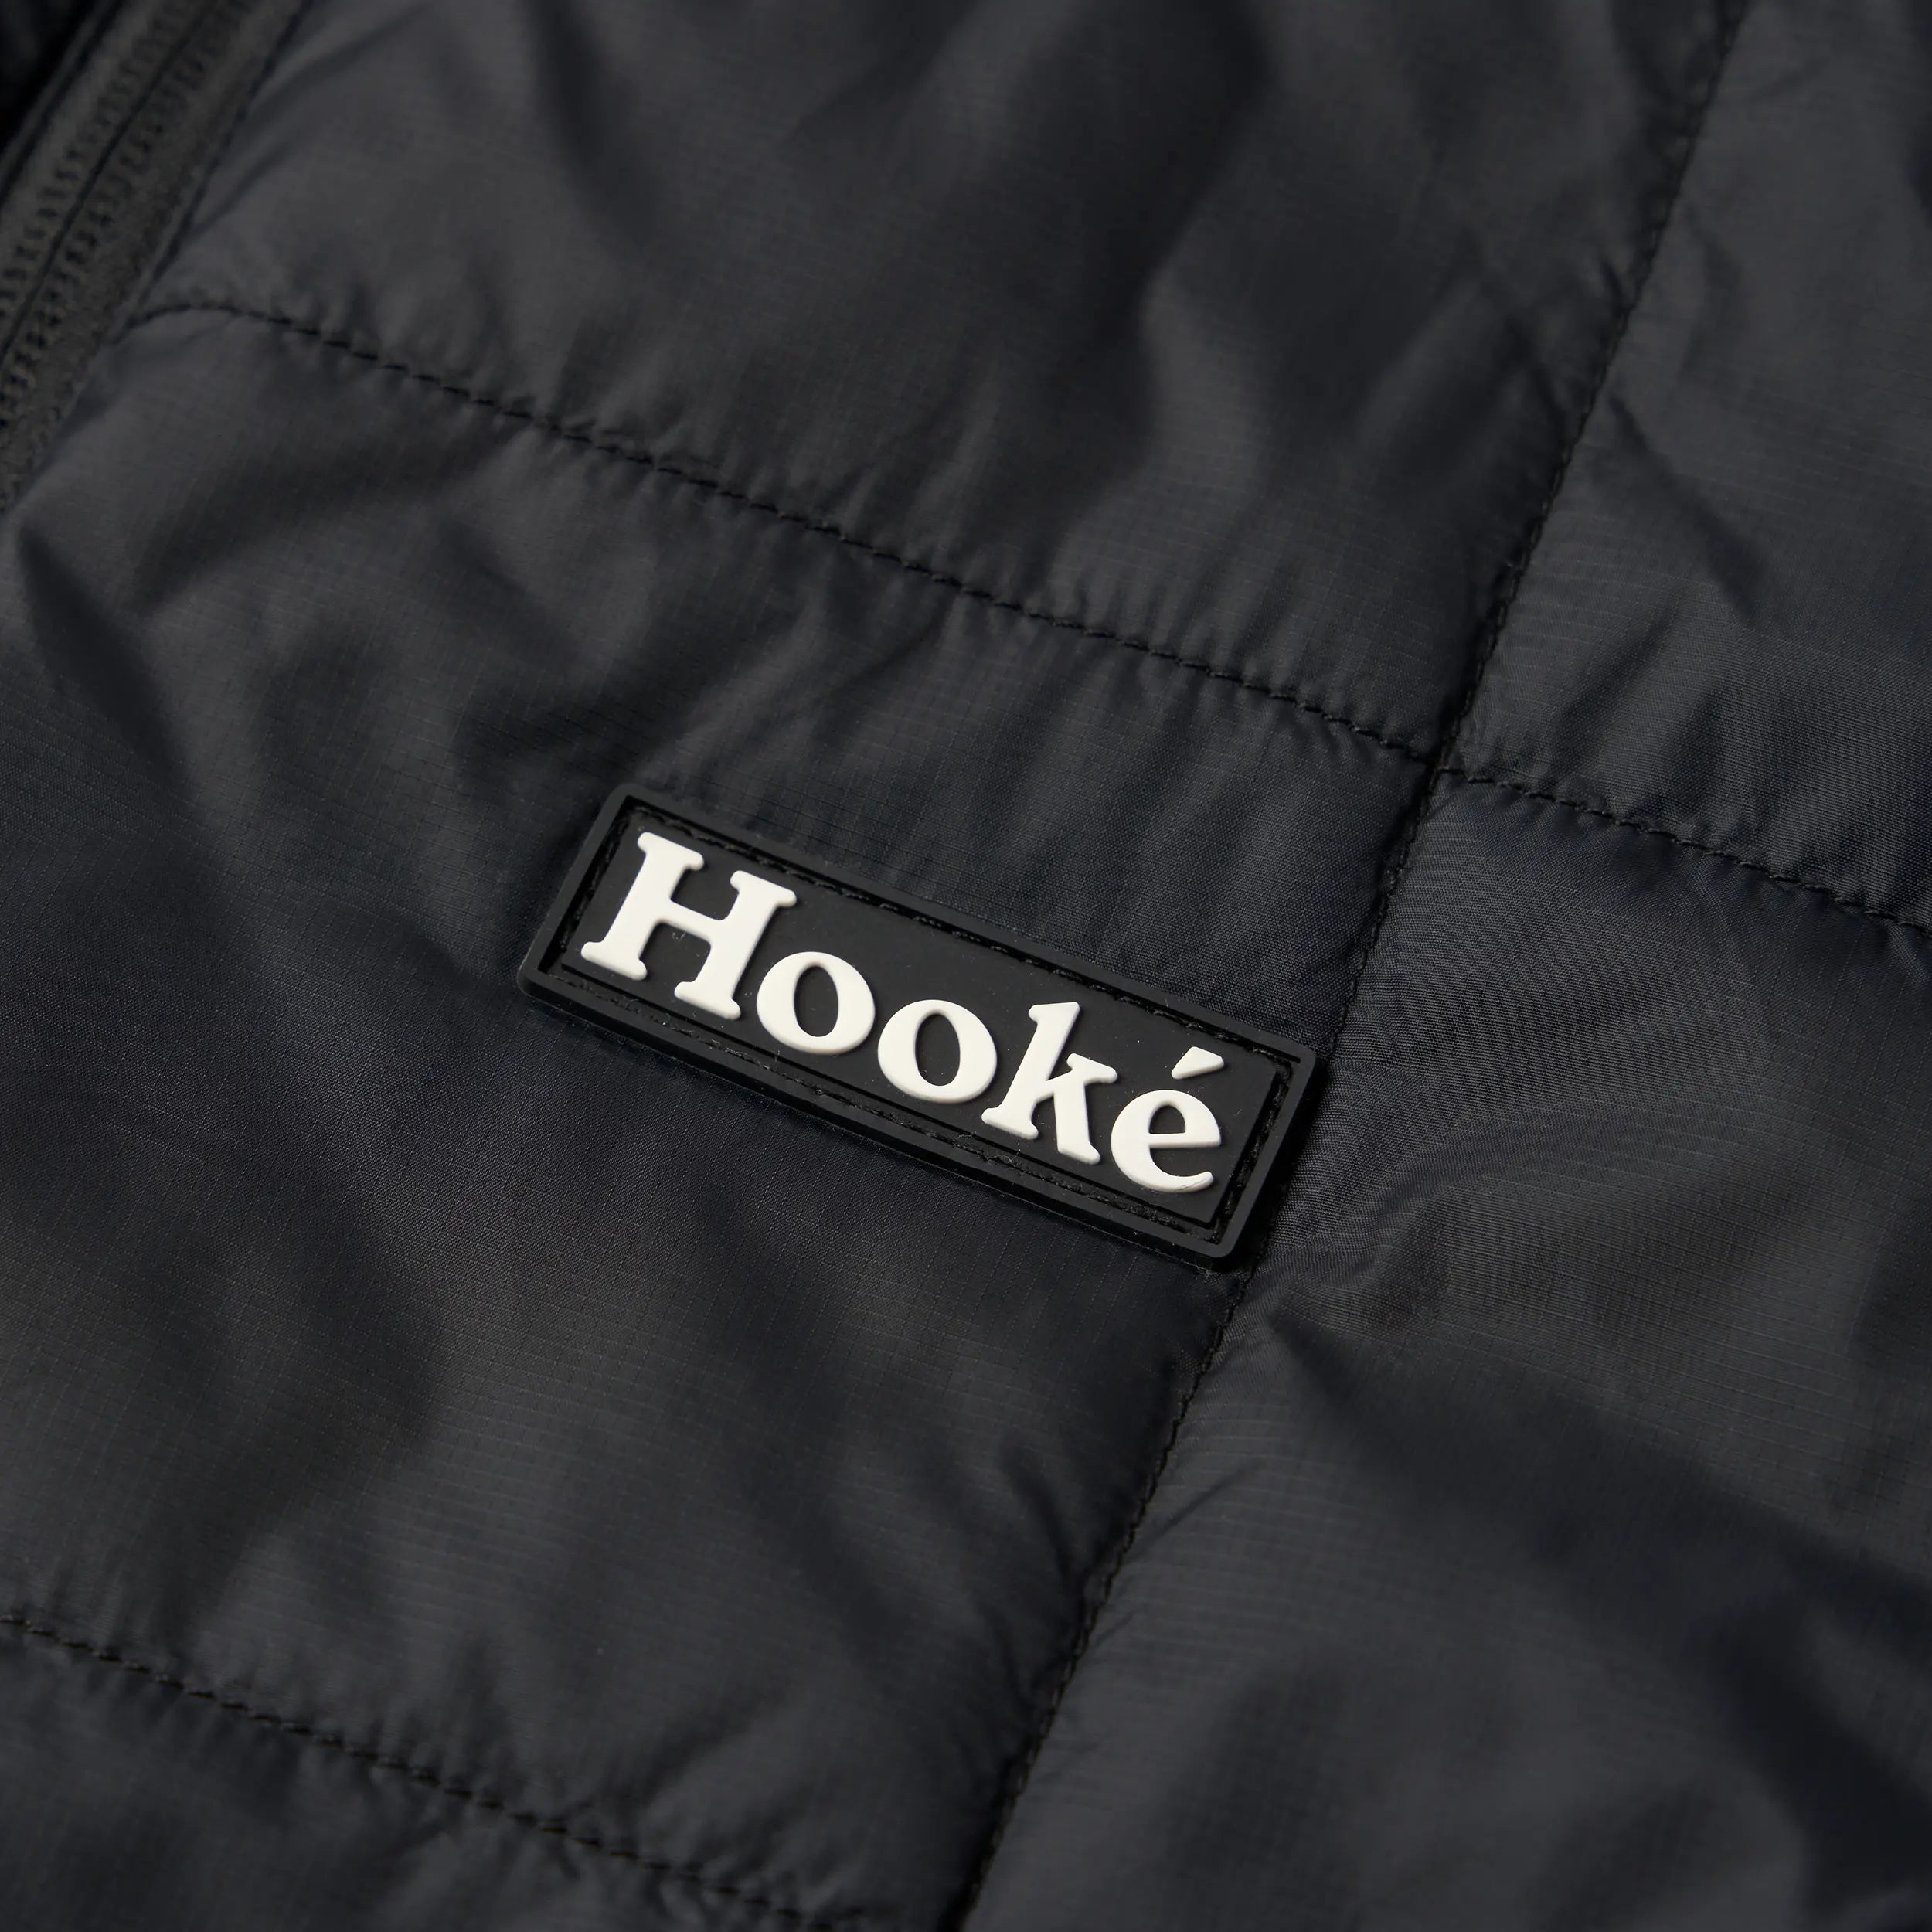 W's Seasonal Lightweight Insulated Vest - Hooké